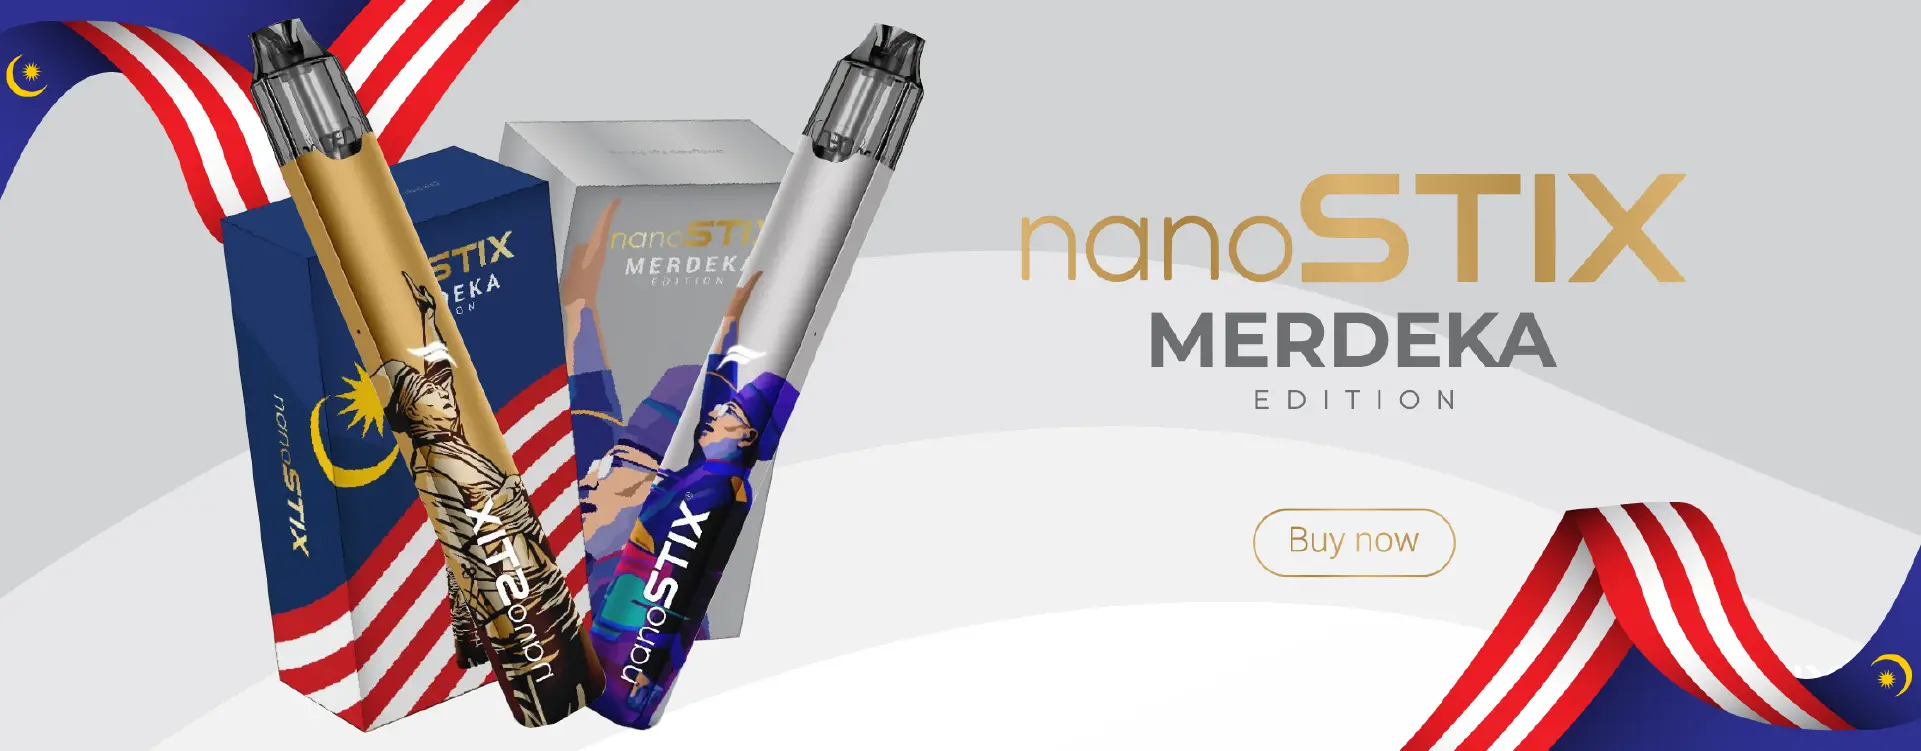 NanoSTIX Neo Merdeka Edition Limited Stock